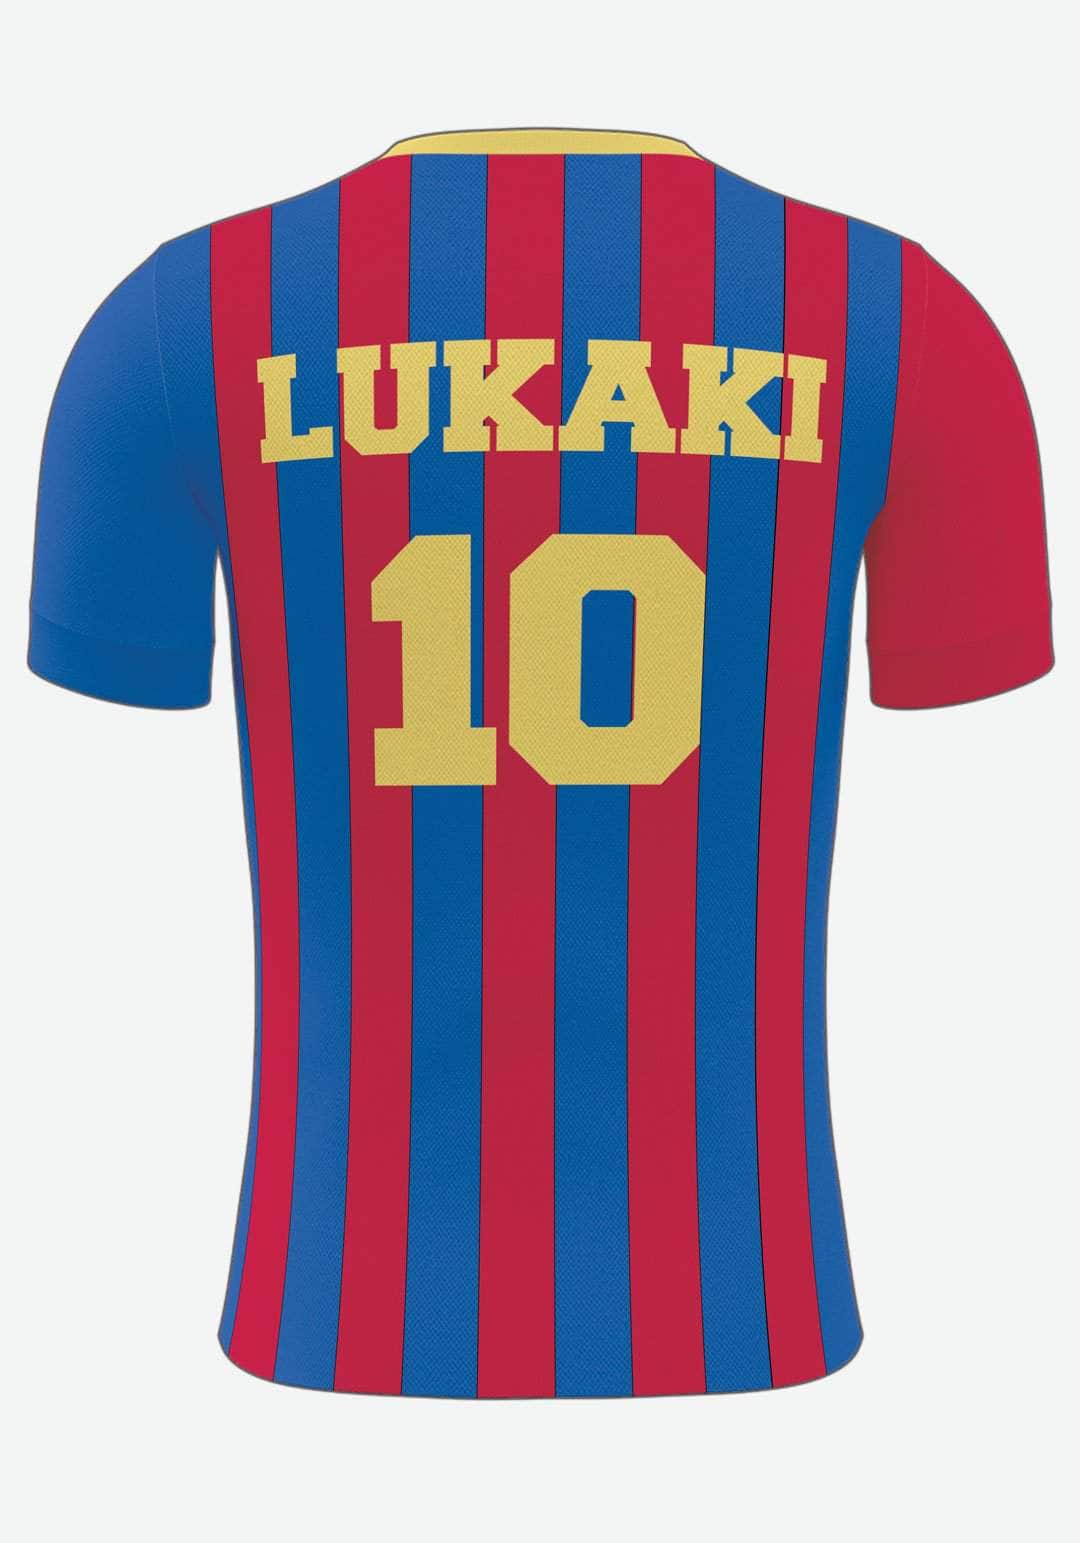 Se Barcelona Fodbold plakat - med eget navn og nummer, 21x30 hos Lukaki.dk